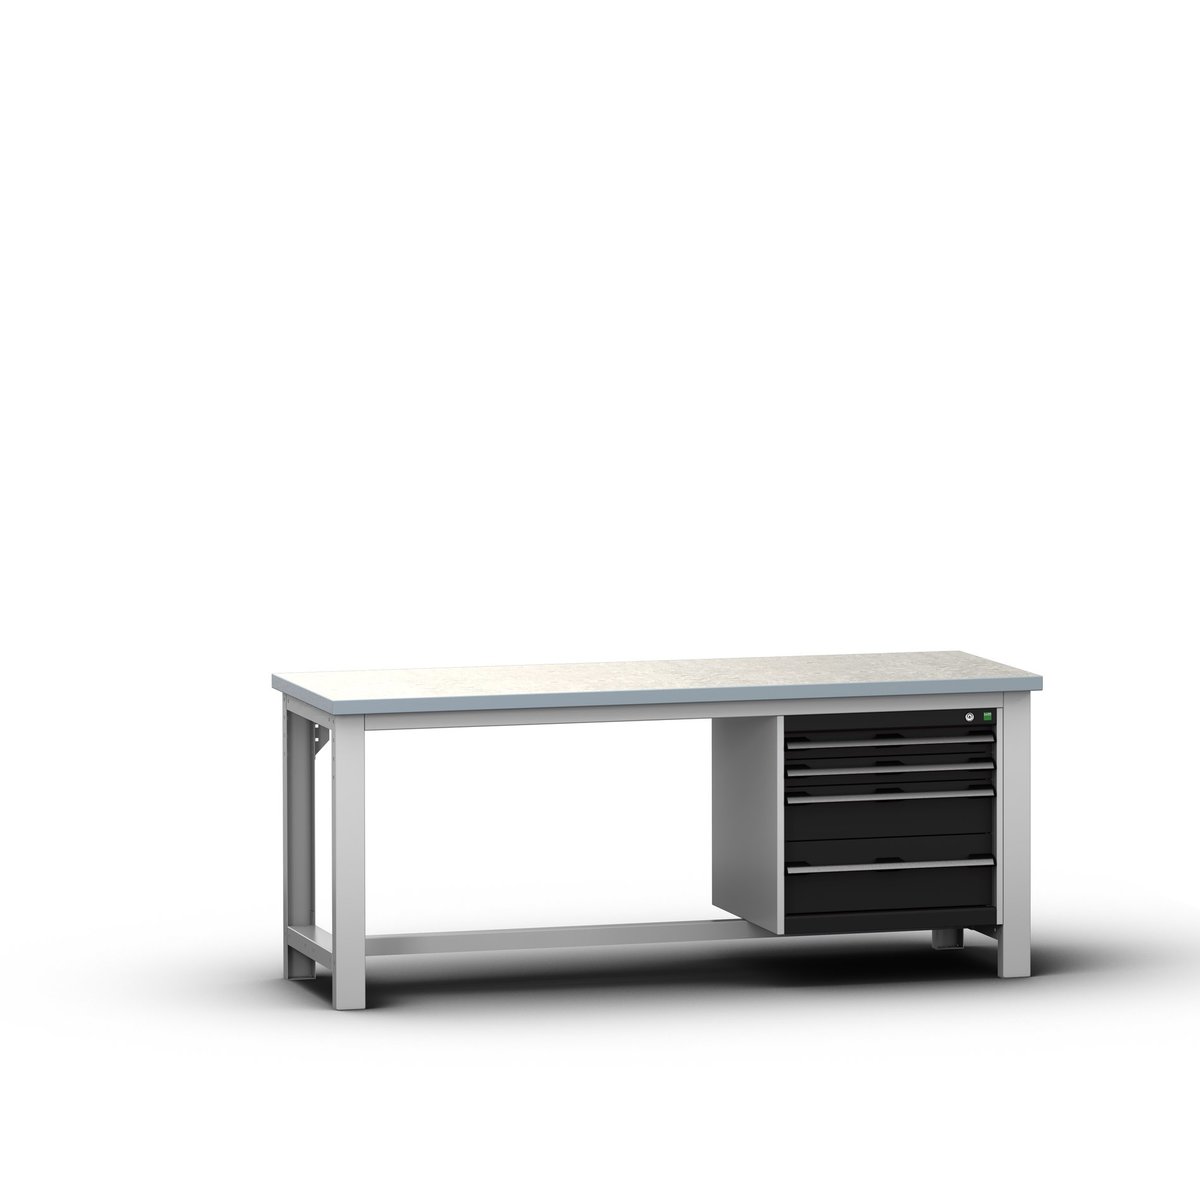 41003228. - cubio framework bench (lino)